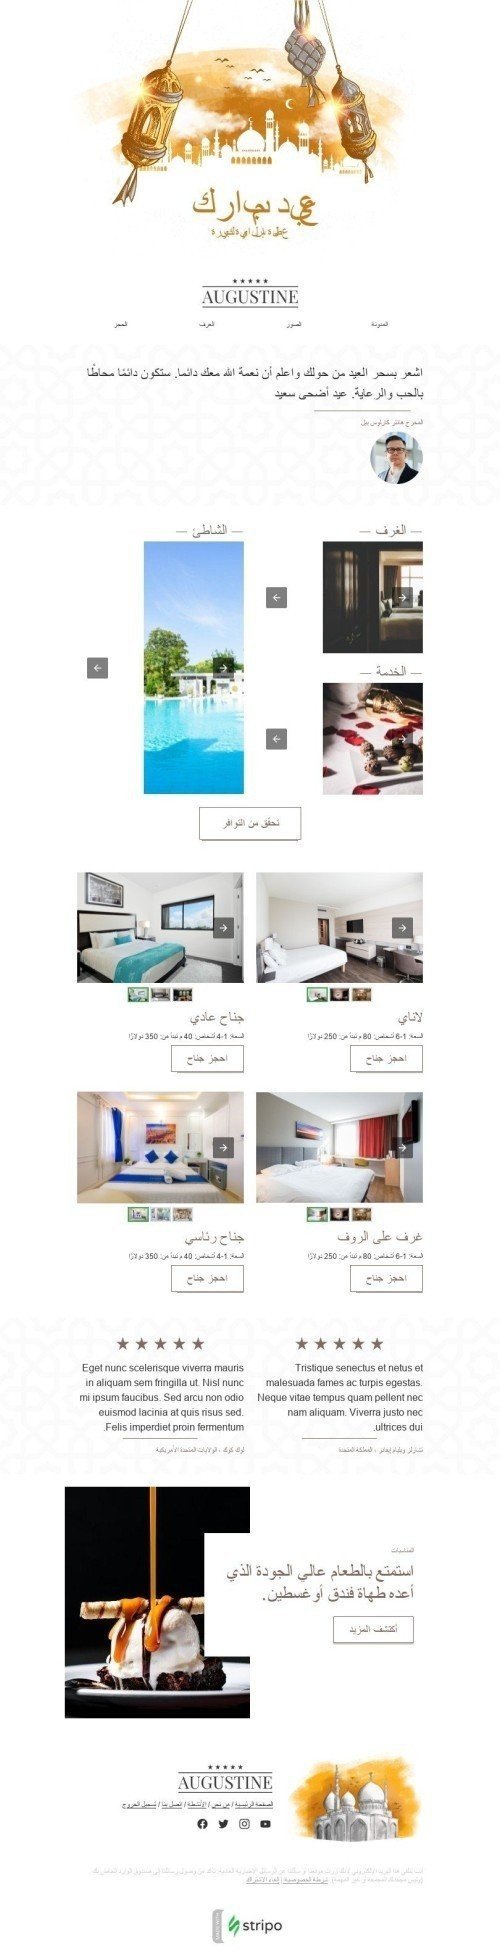 Kurban Bayrami Email Template «Augustine» for Hotels industry desktop view